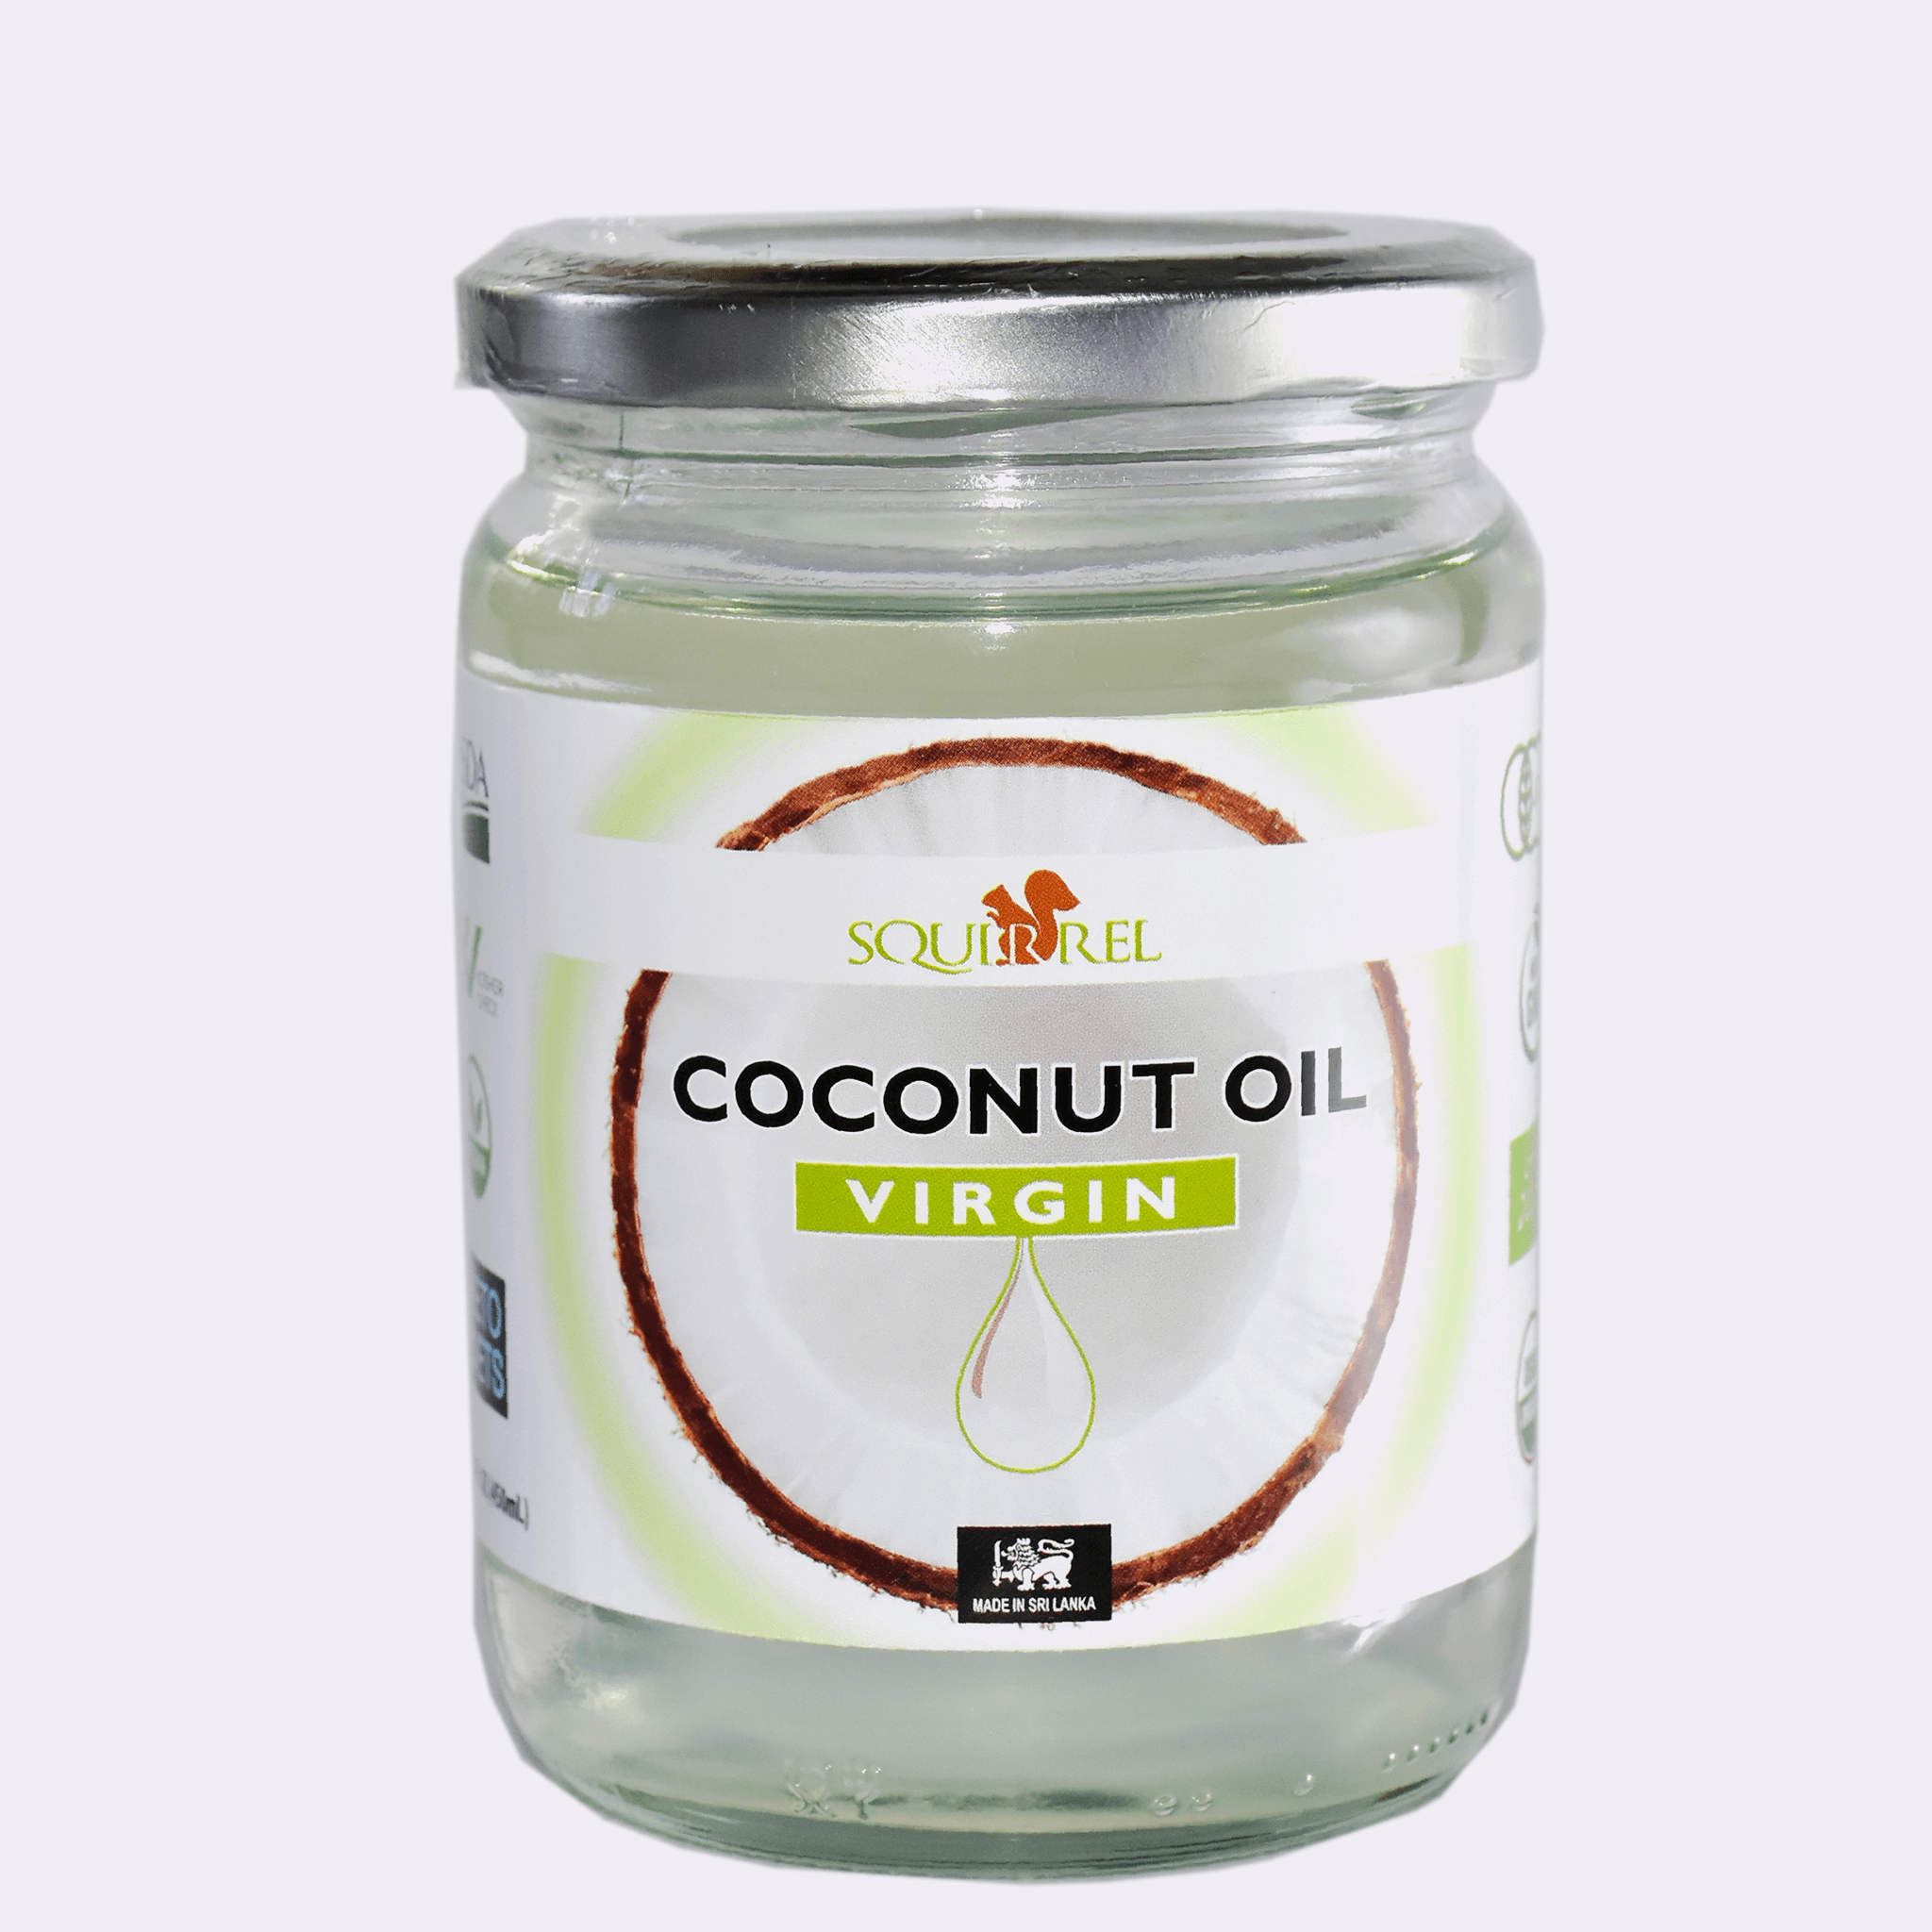 Virgin coconut oil from Ceylon(Sri Lanka)